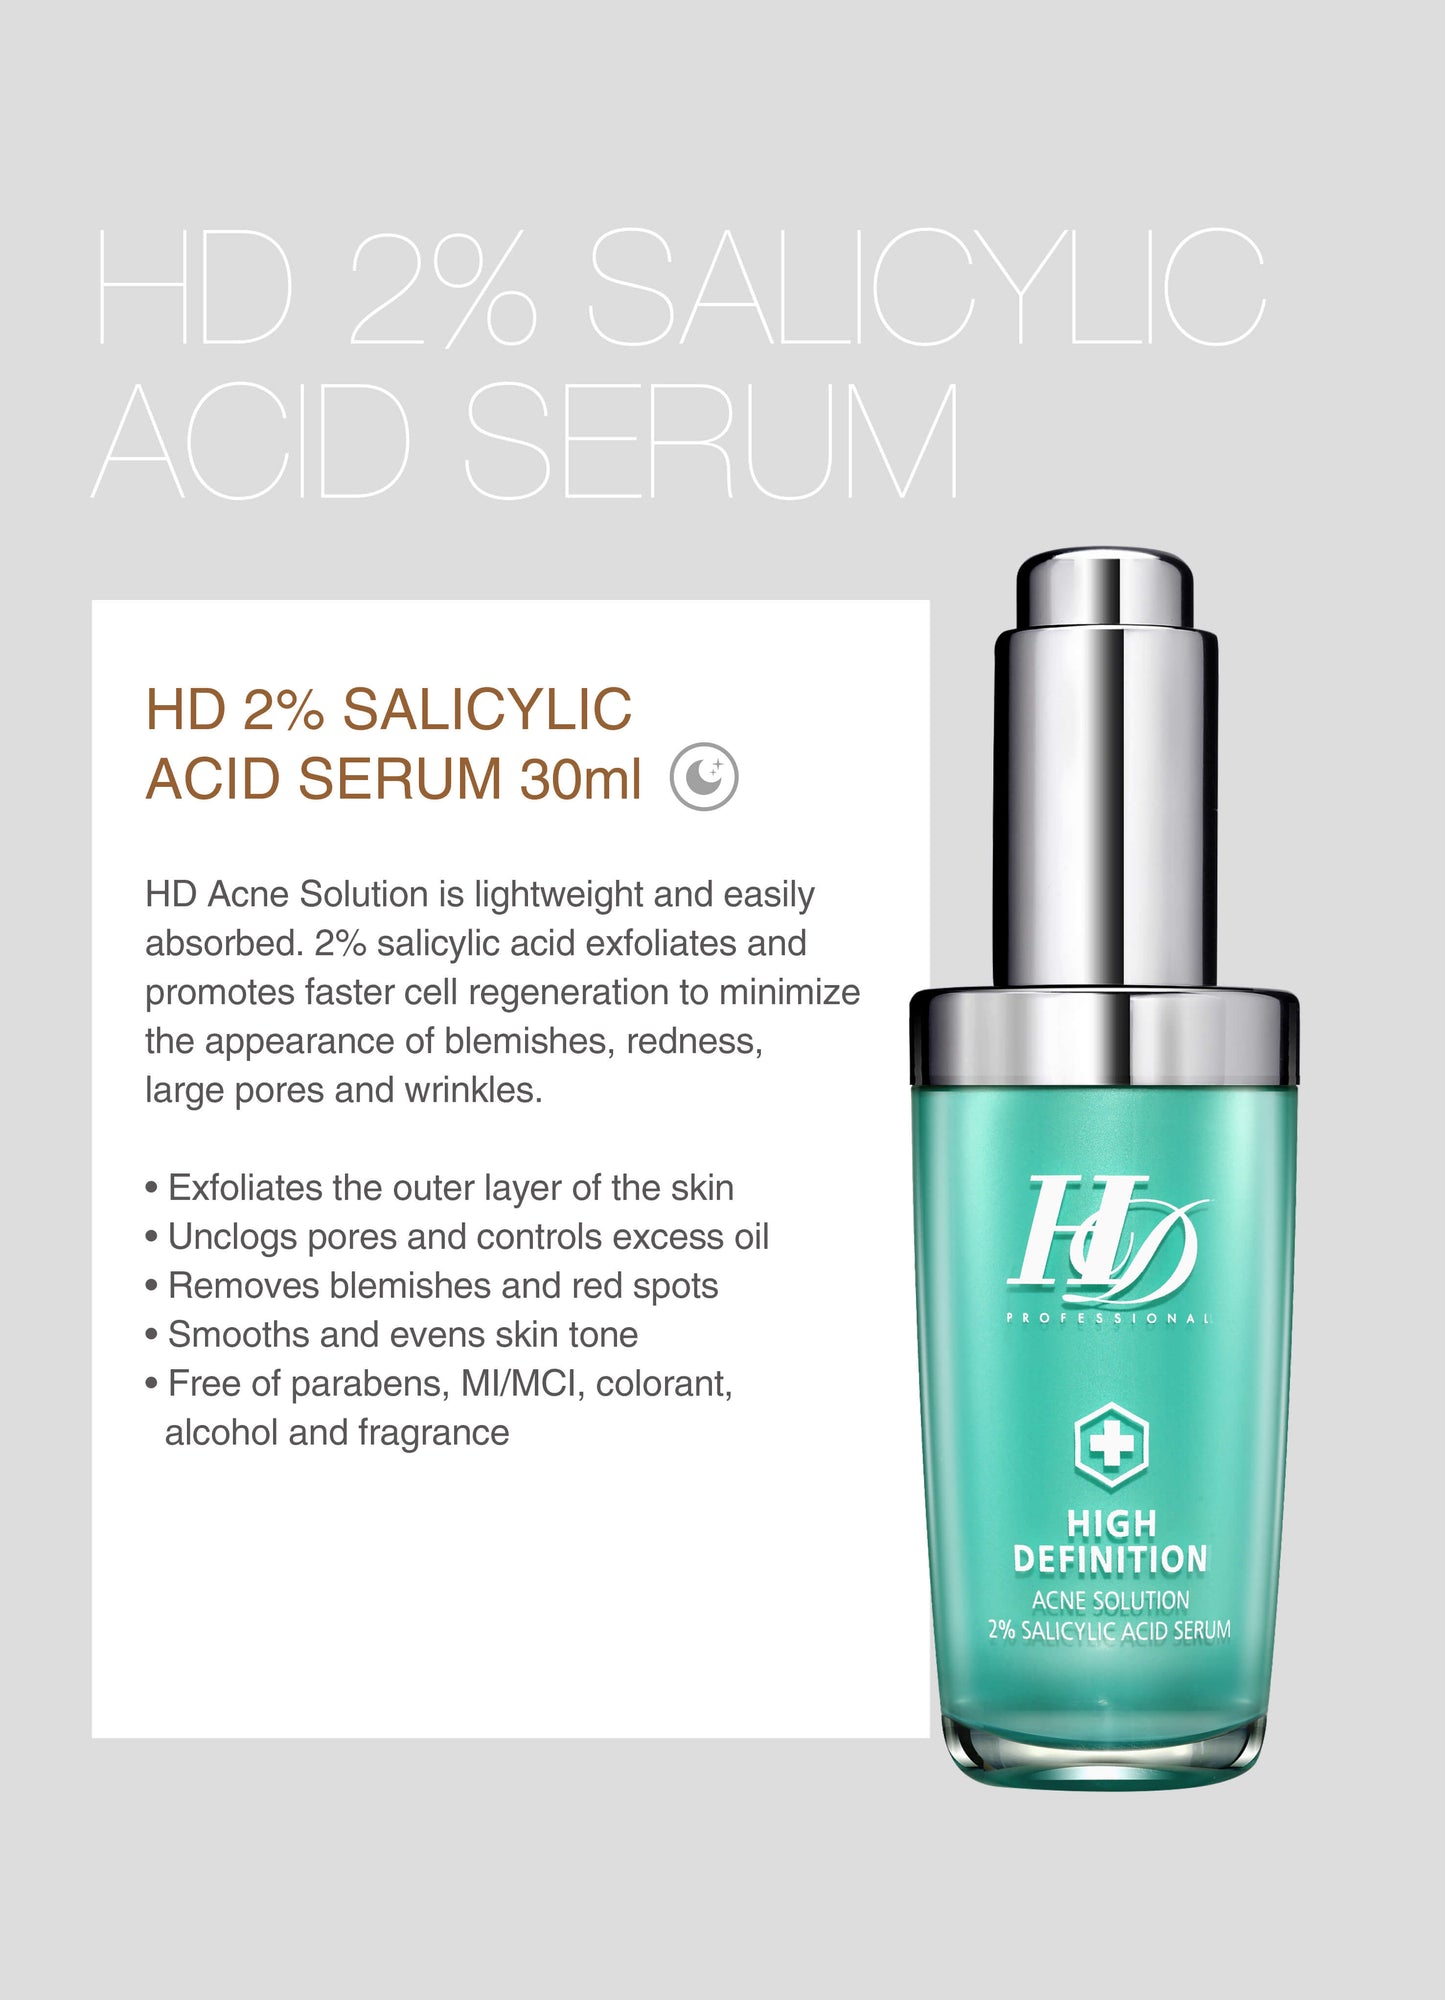 HD Acne Solution 2% Salicylic Acid Serum - KatTong